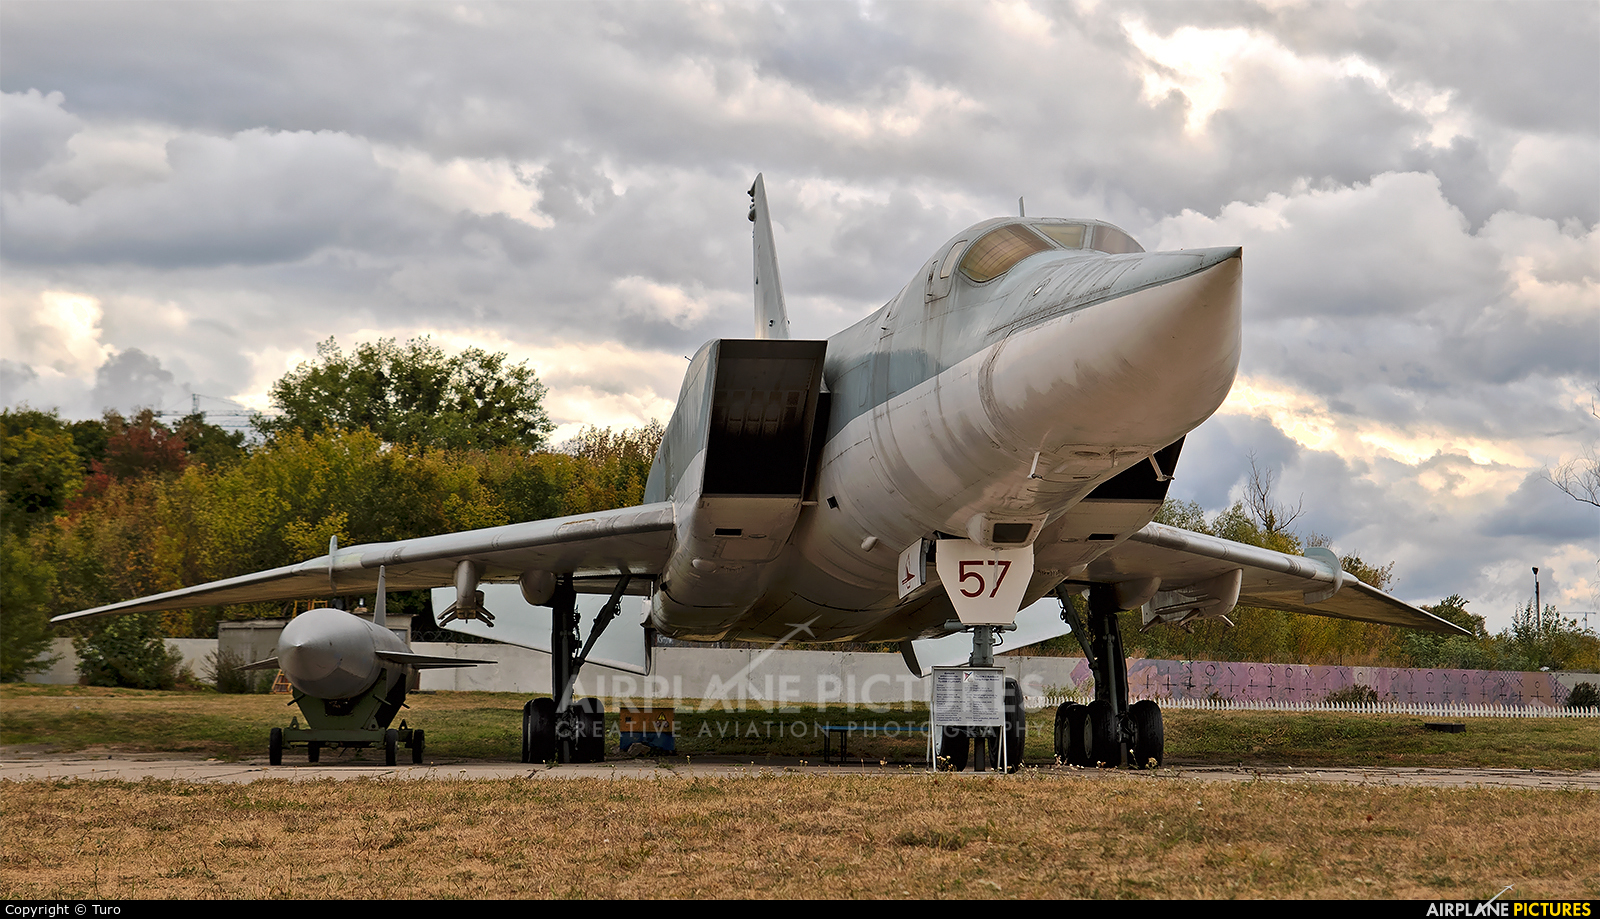 Ukraine - Air Force 57 aircraft at Kyiv - Zhulyany State Aviation Museum